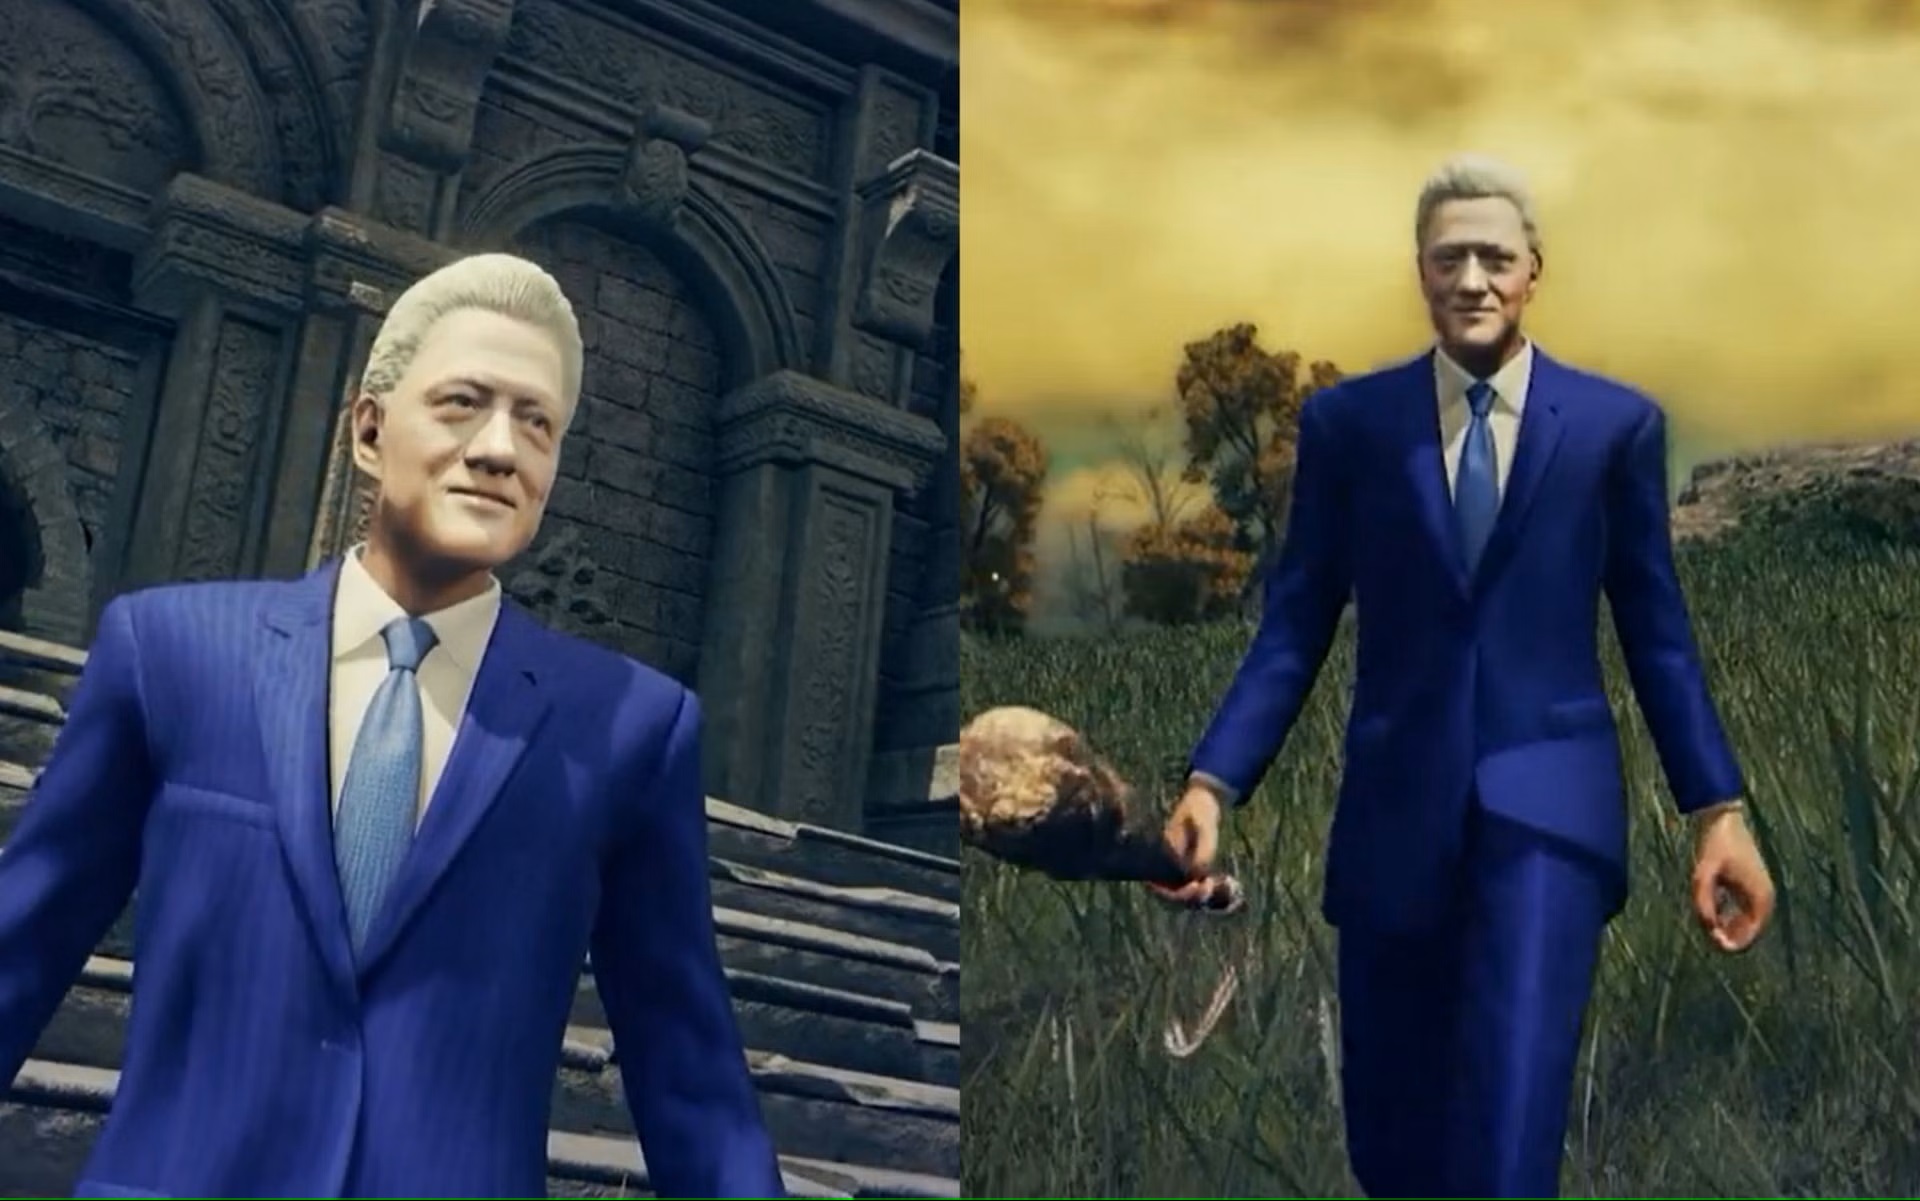 Bill Clinton arrives at Elden Ring thanks to a mod, GamersRD